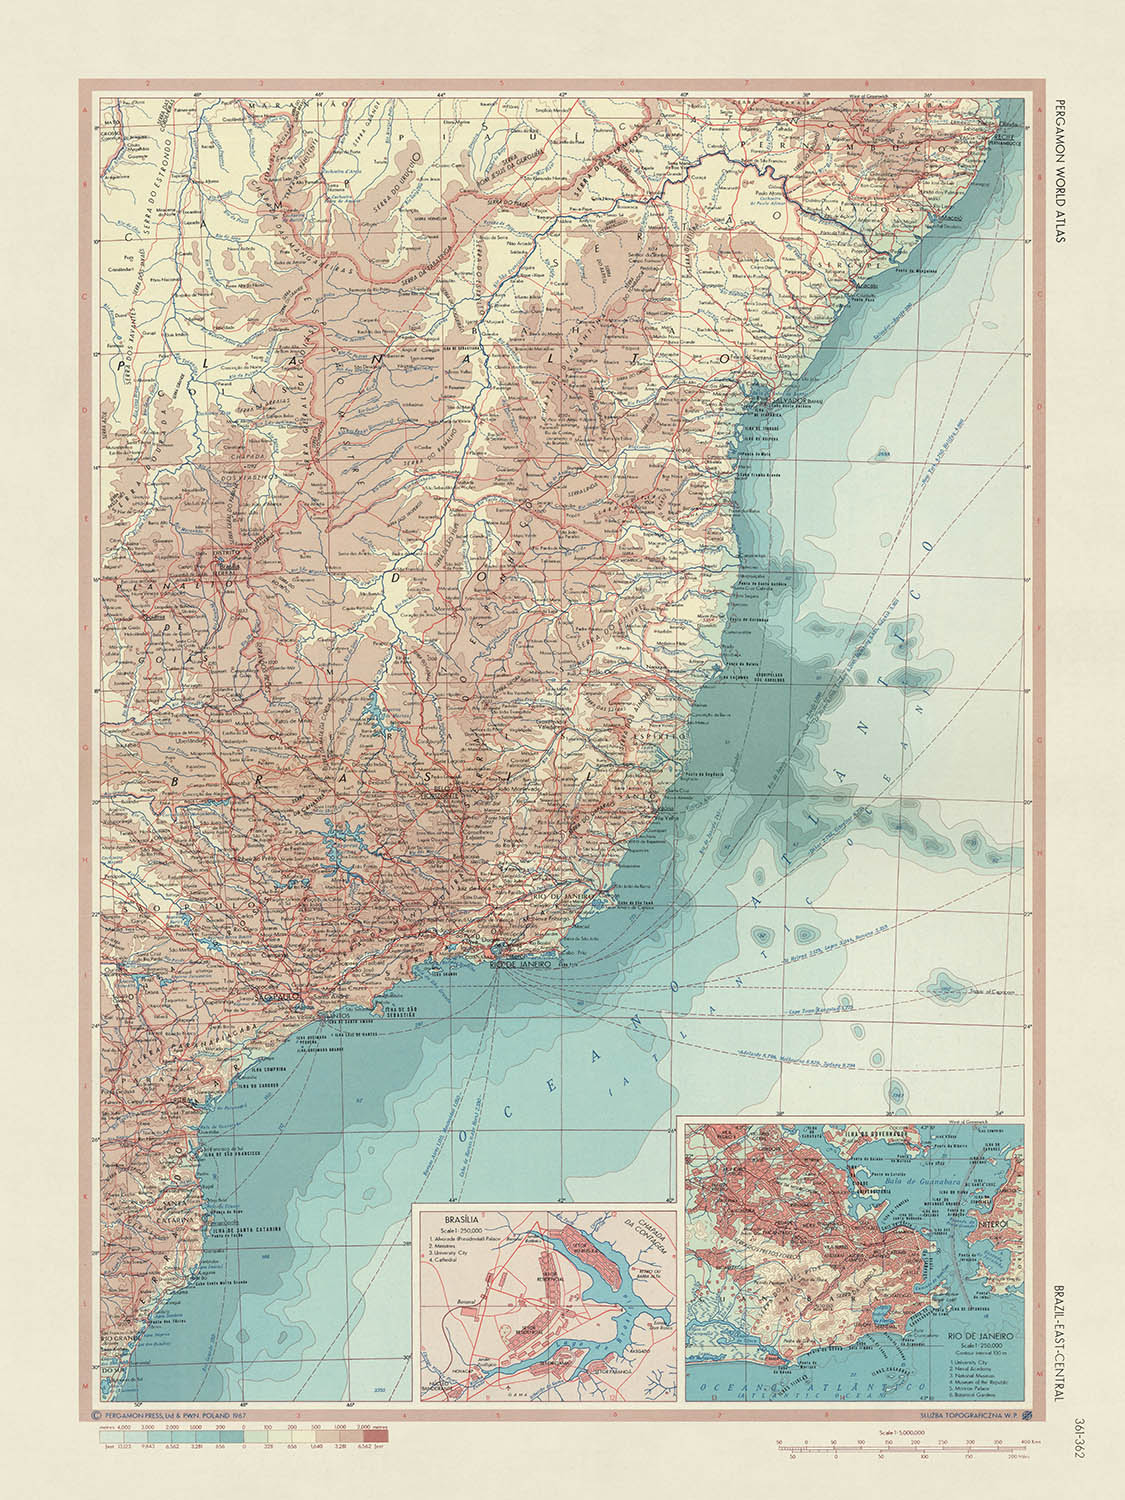 Old Map of East Brazil, 1967: São Paulo, Rio de Janeiro, Brasília, Amazon River, Pantanal